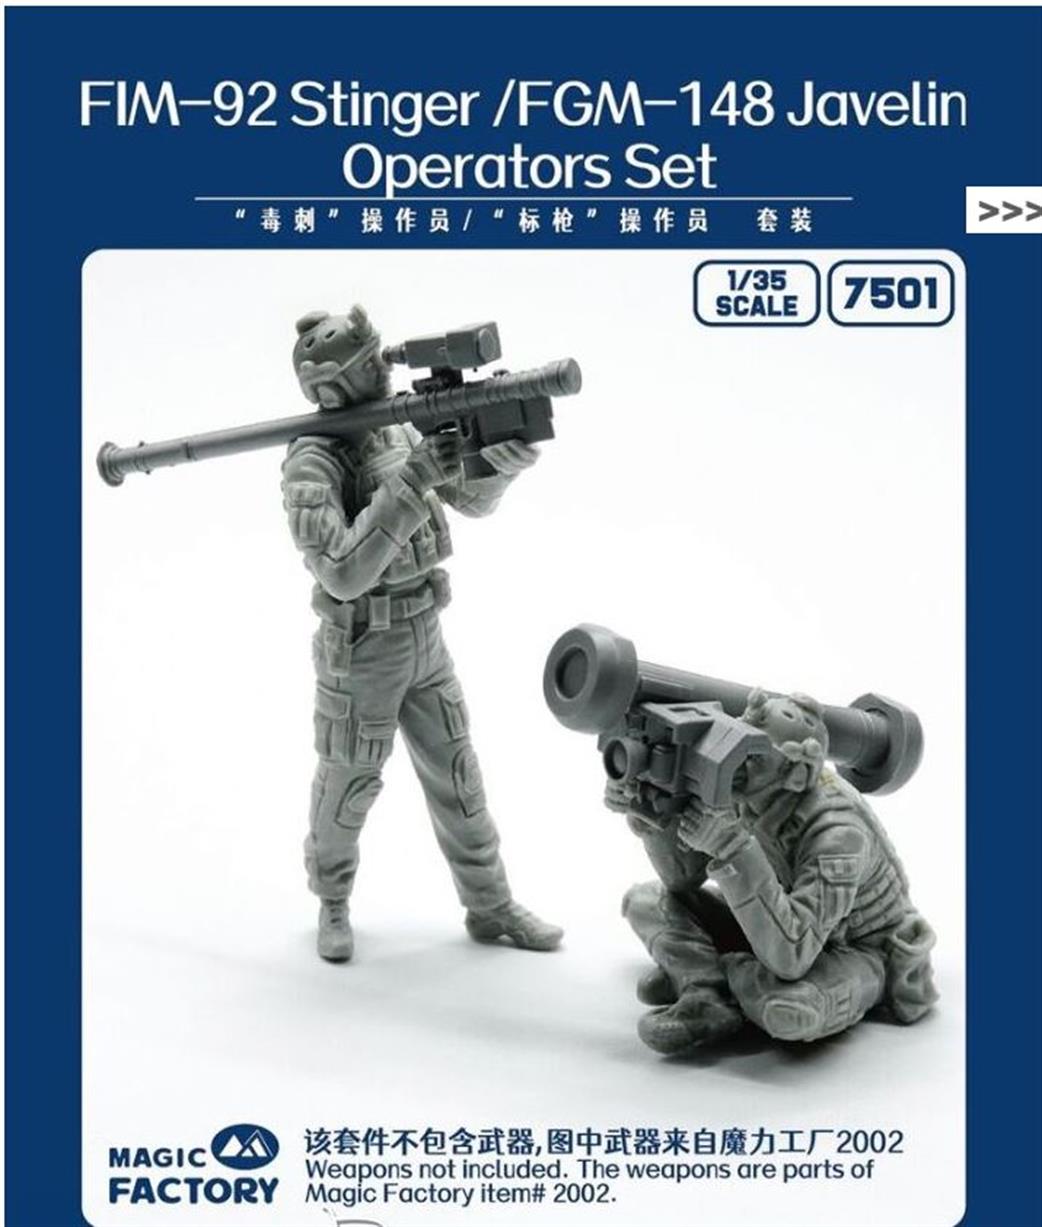 Magic Factory 1/35 7501 Stinger & Javelin Operators Set Resin Kit